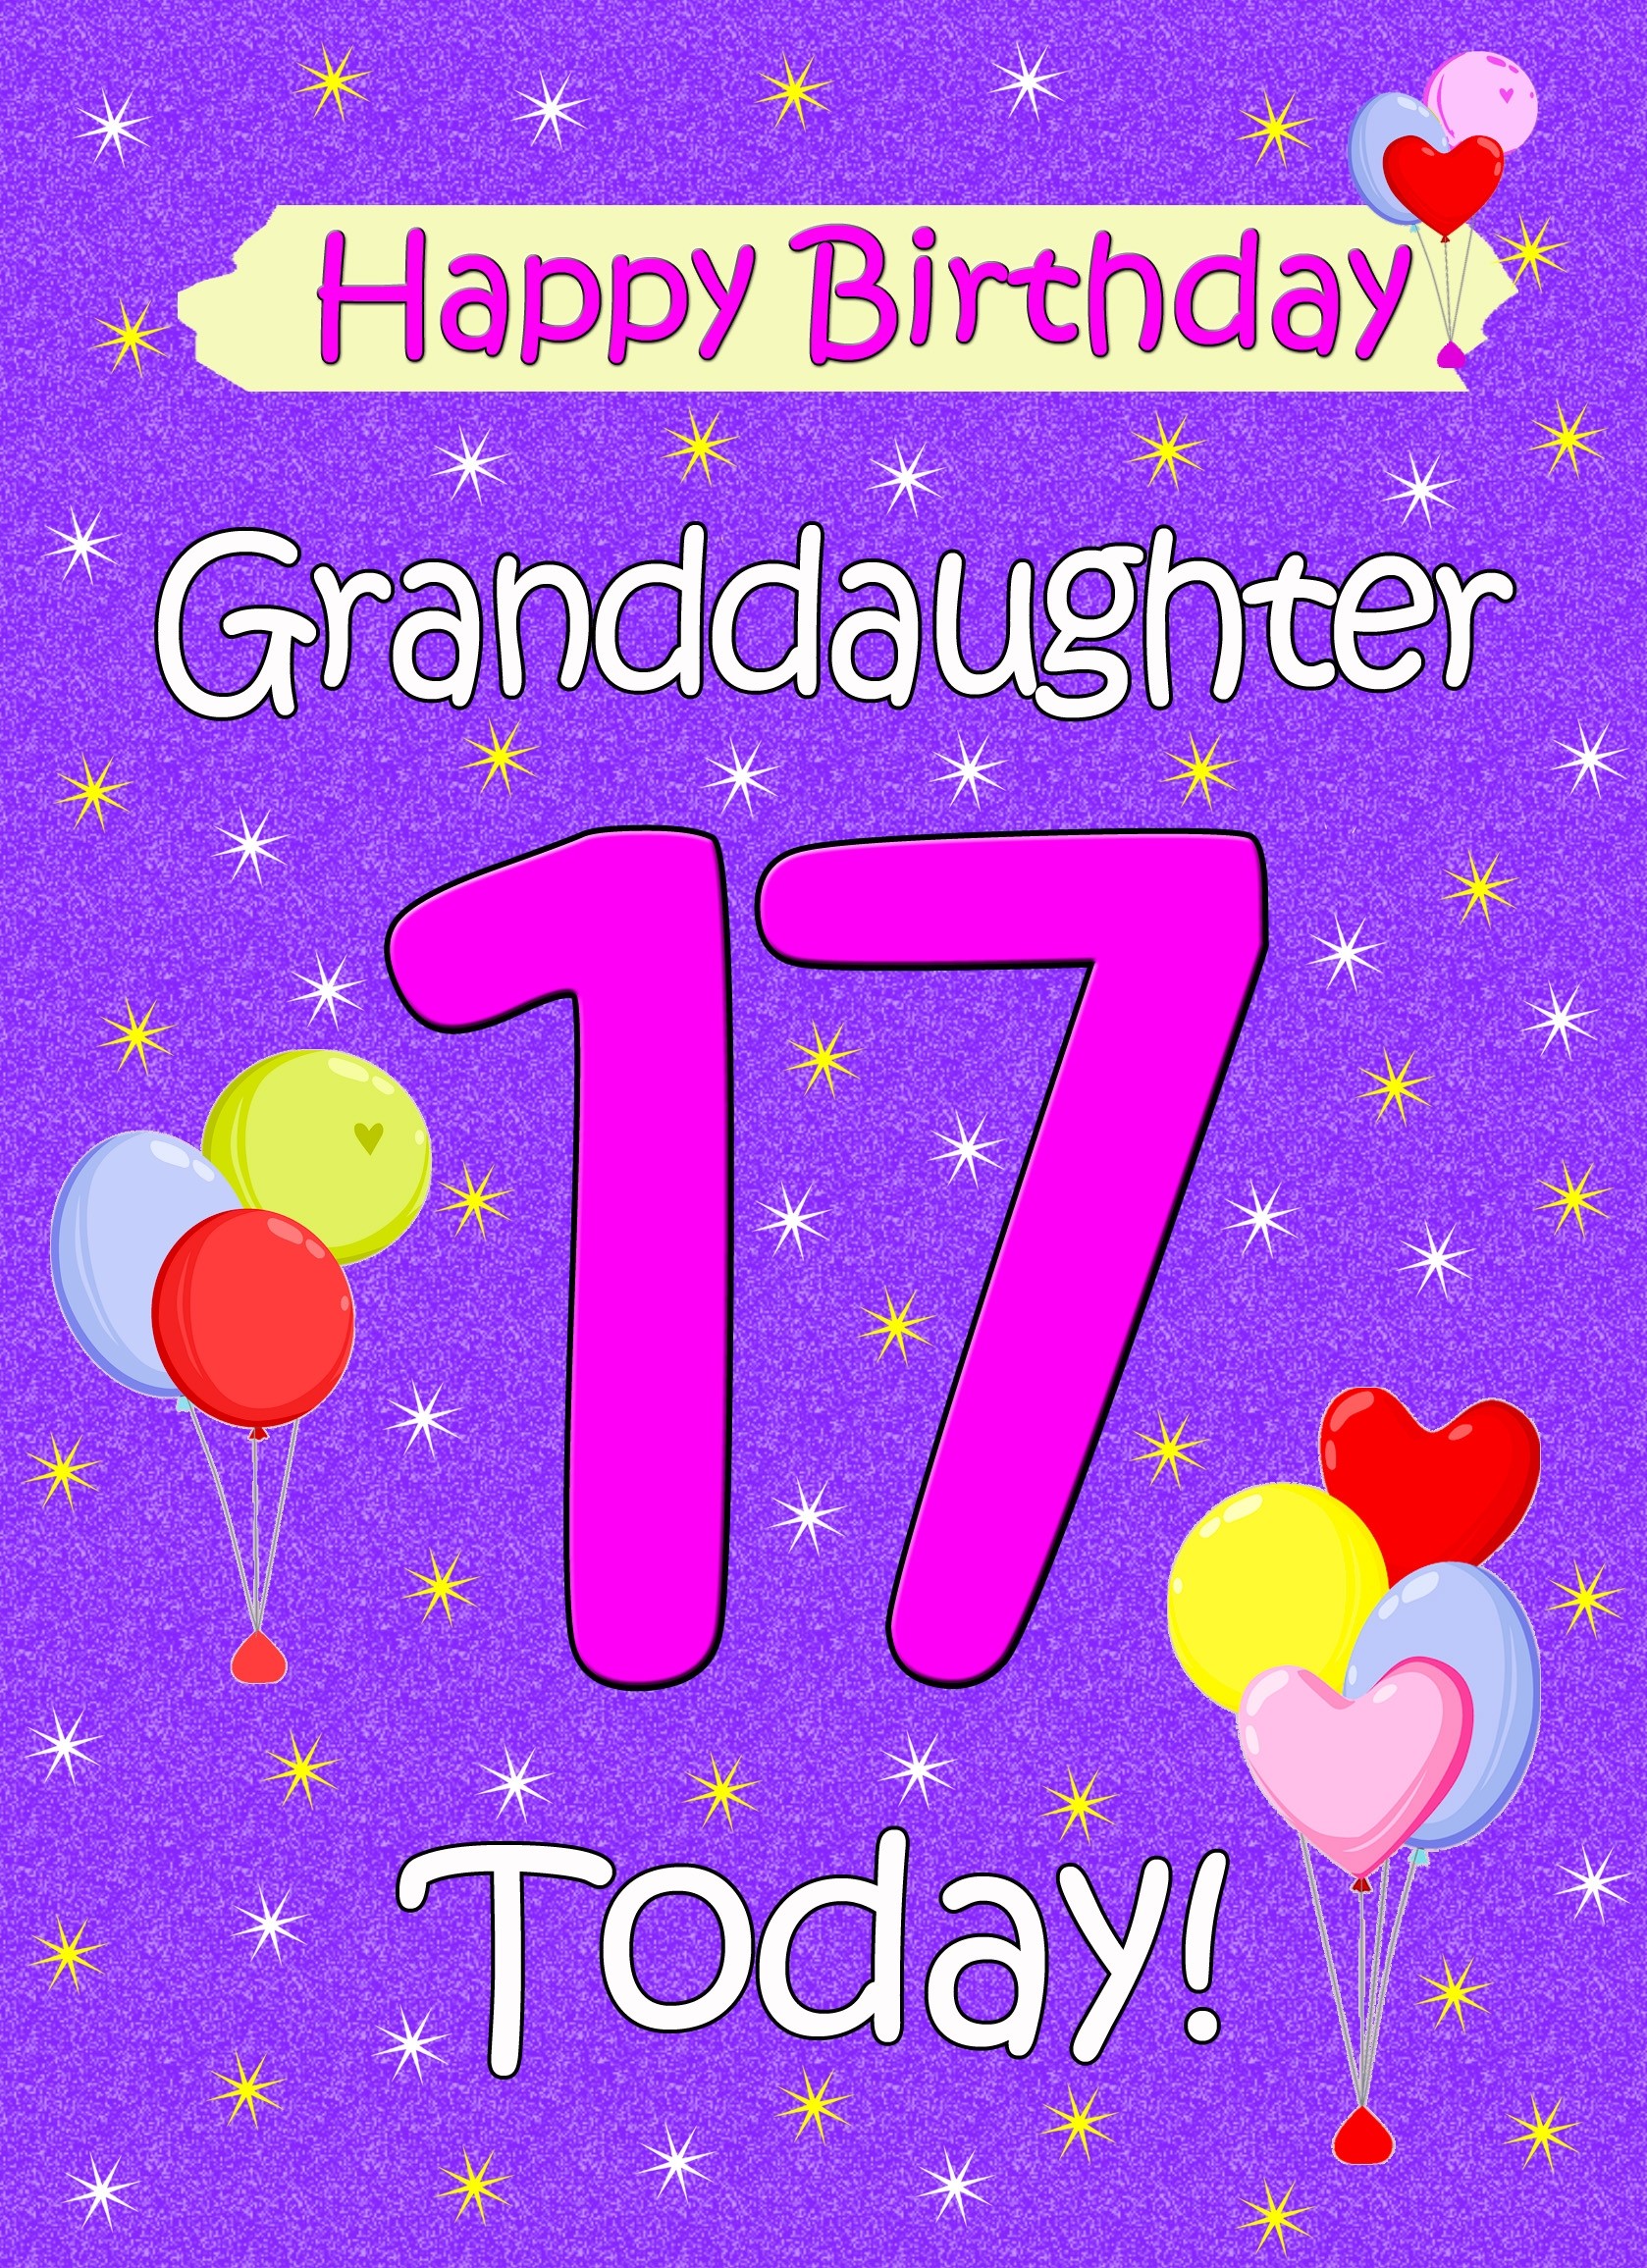 Granddaughter 17th Birthday Card (Lilac)